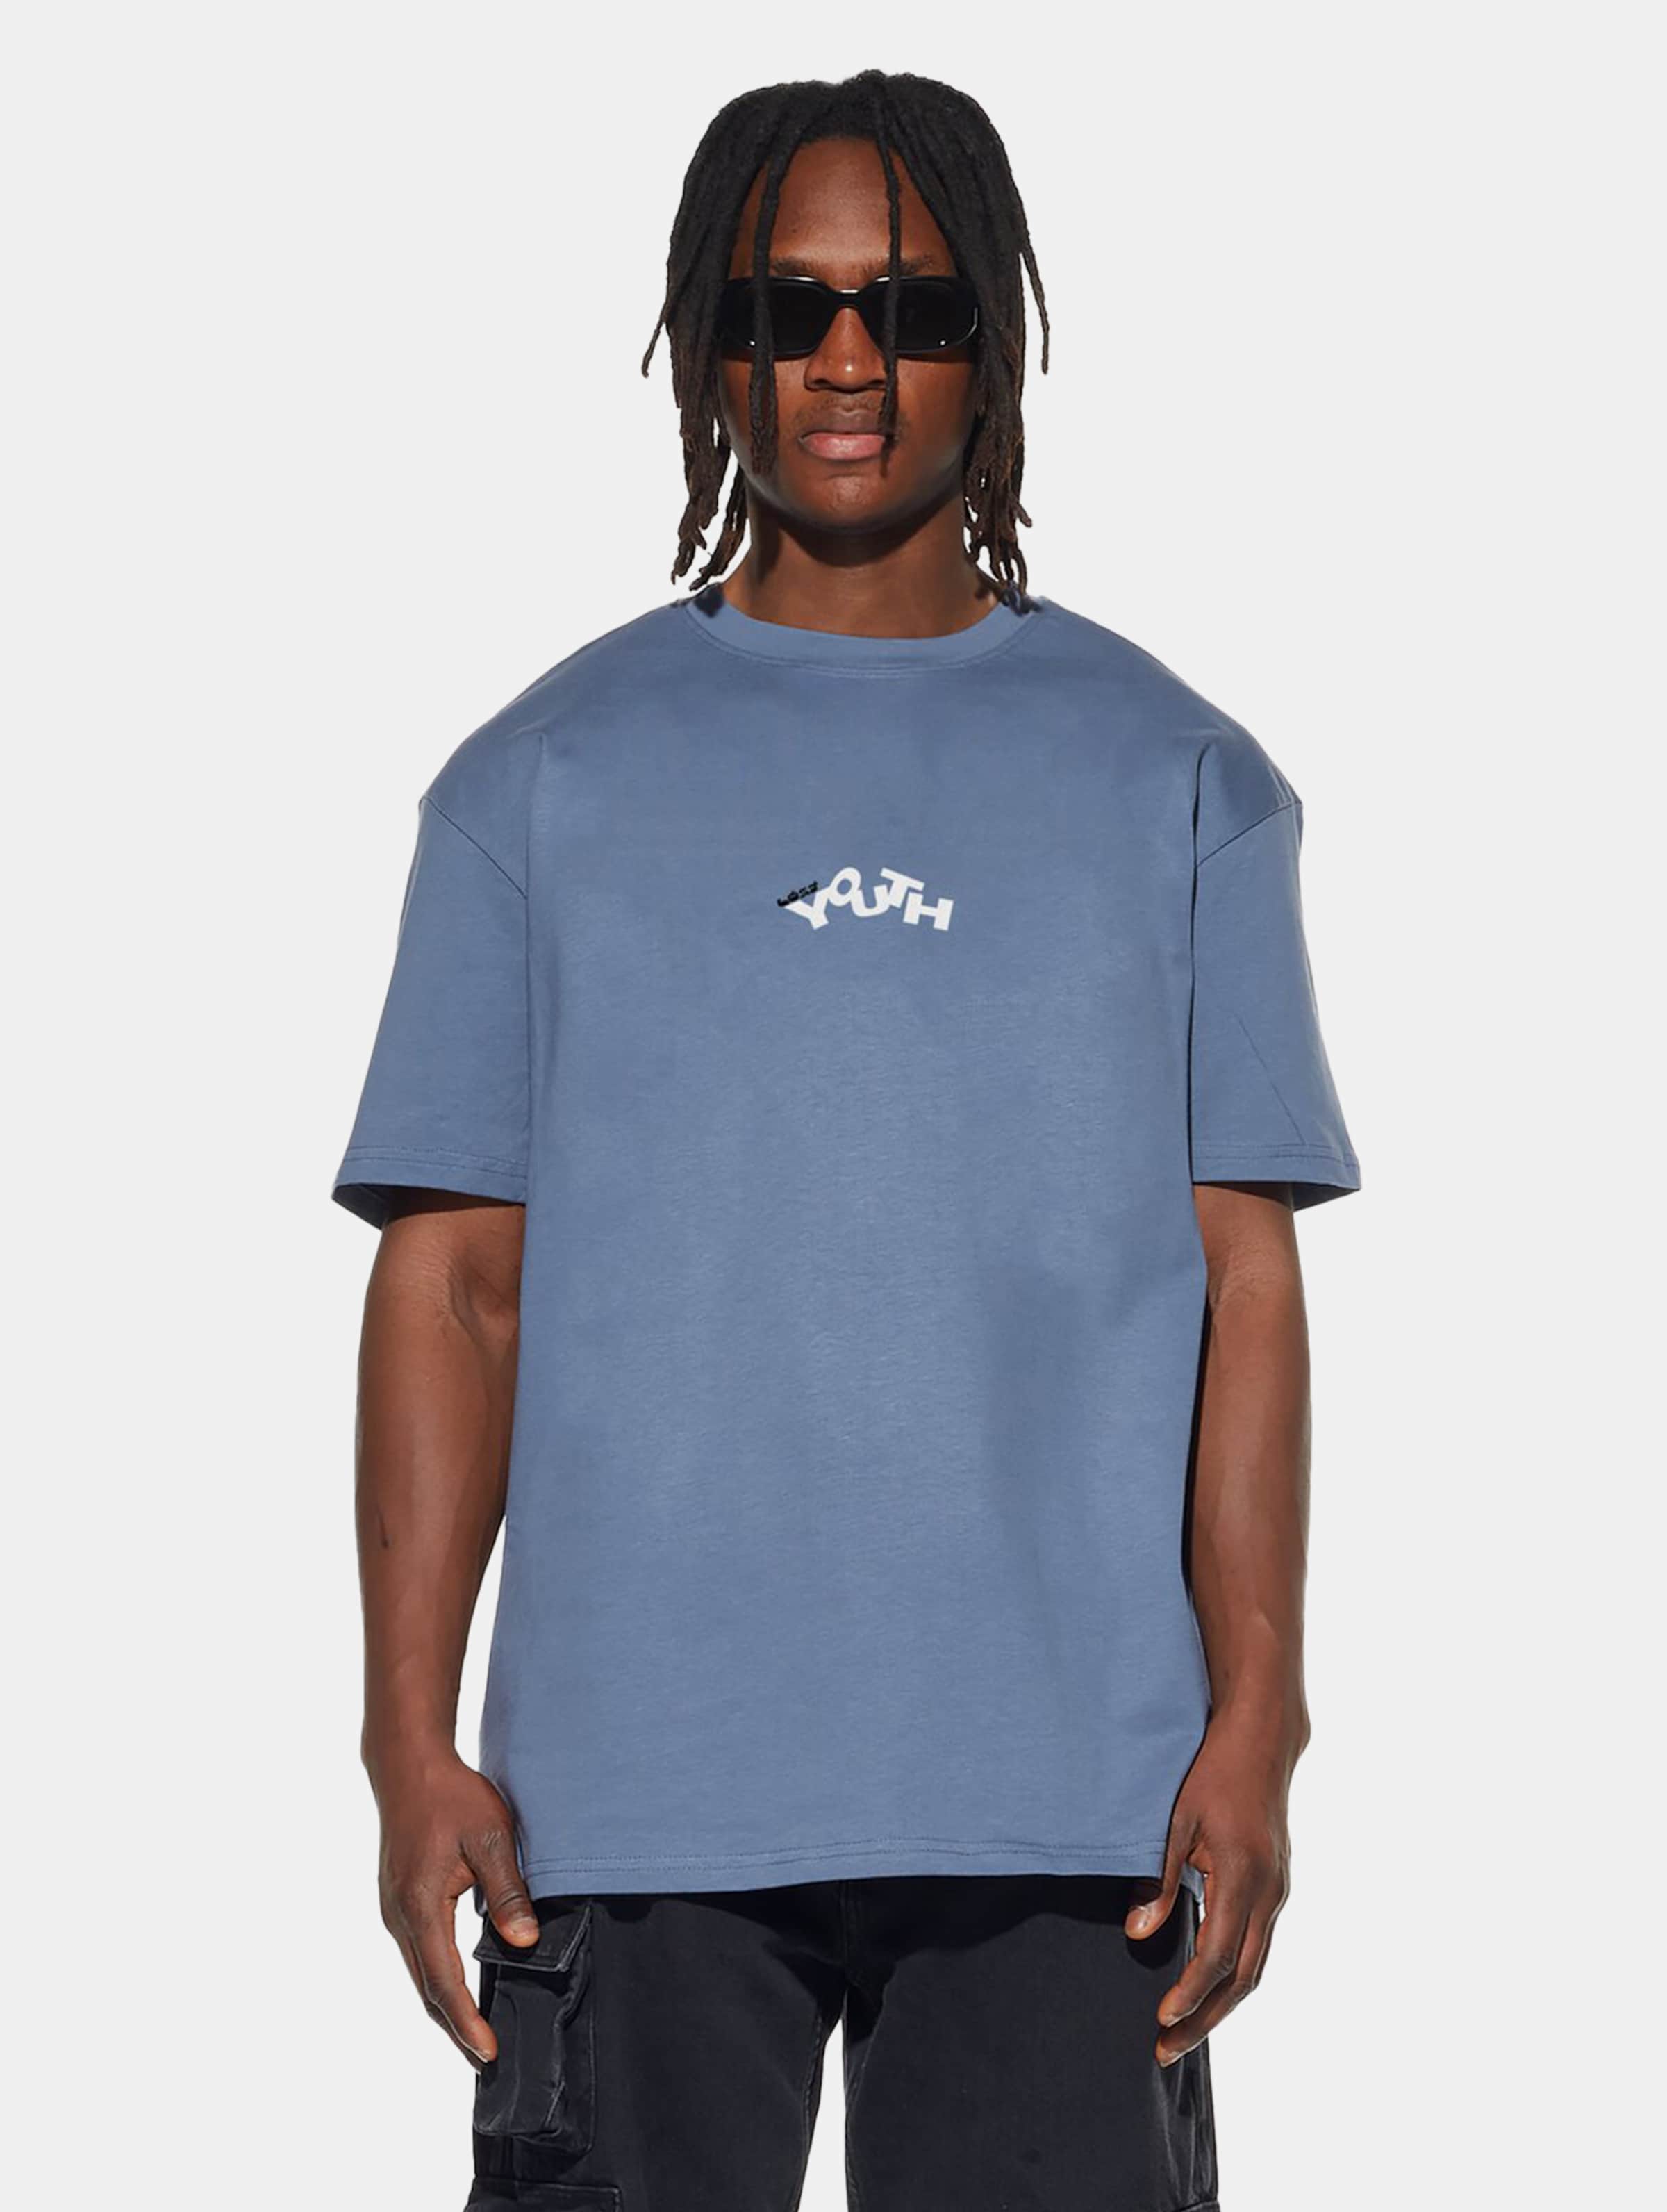 Lost Youth ''Youth'' T-Shirt Männer,Unisex op kleur blauw, Maat S